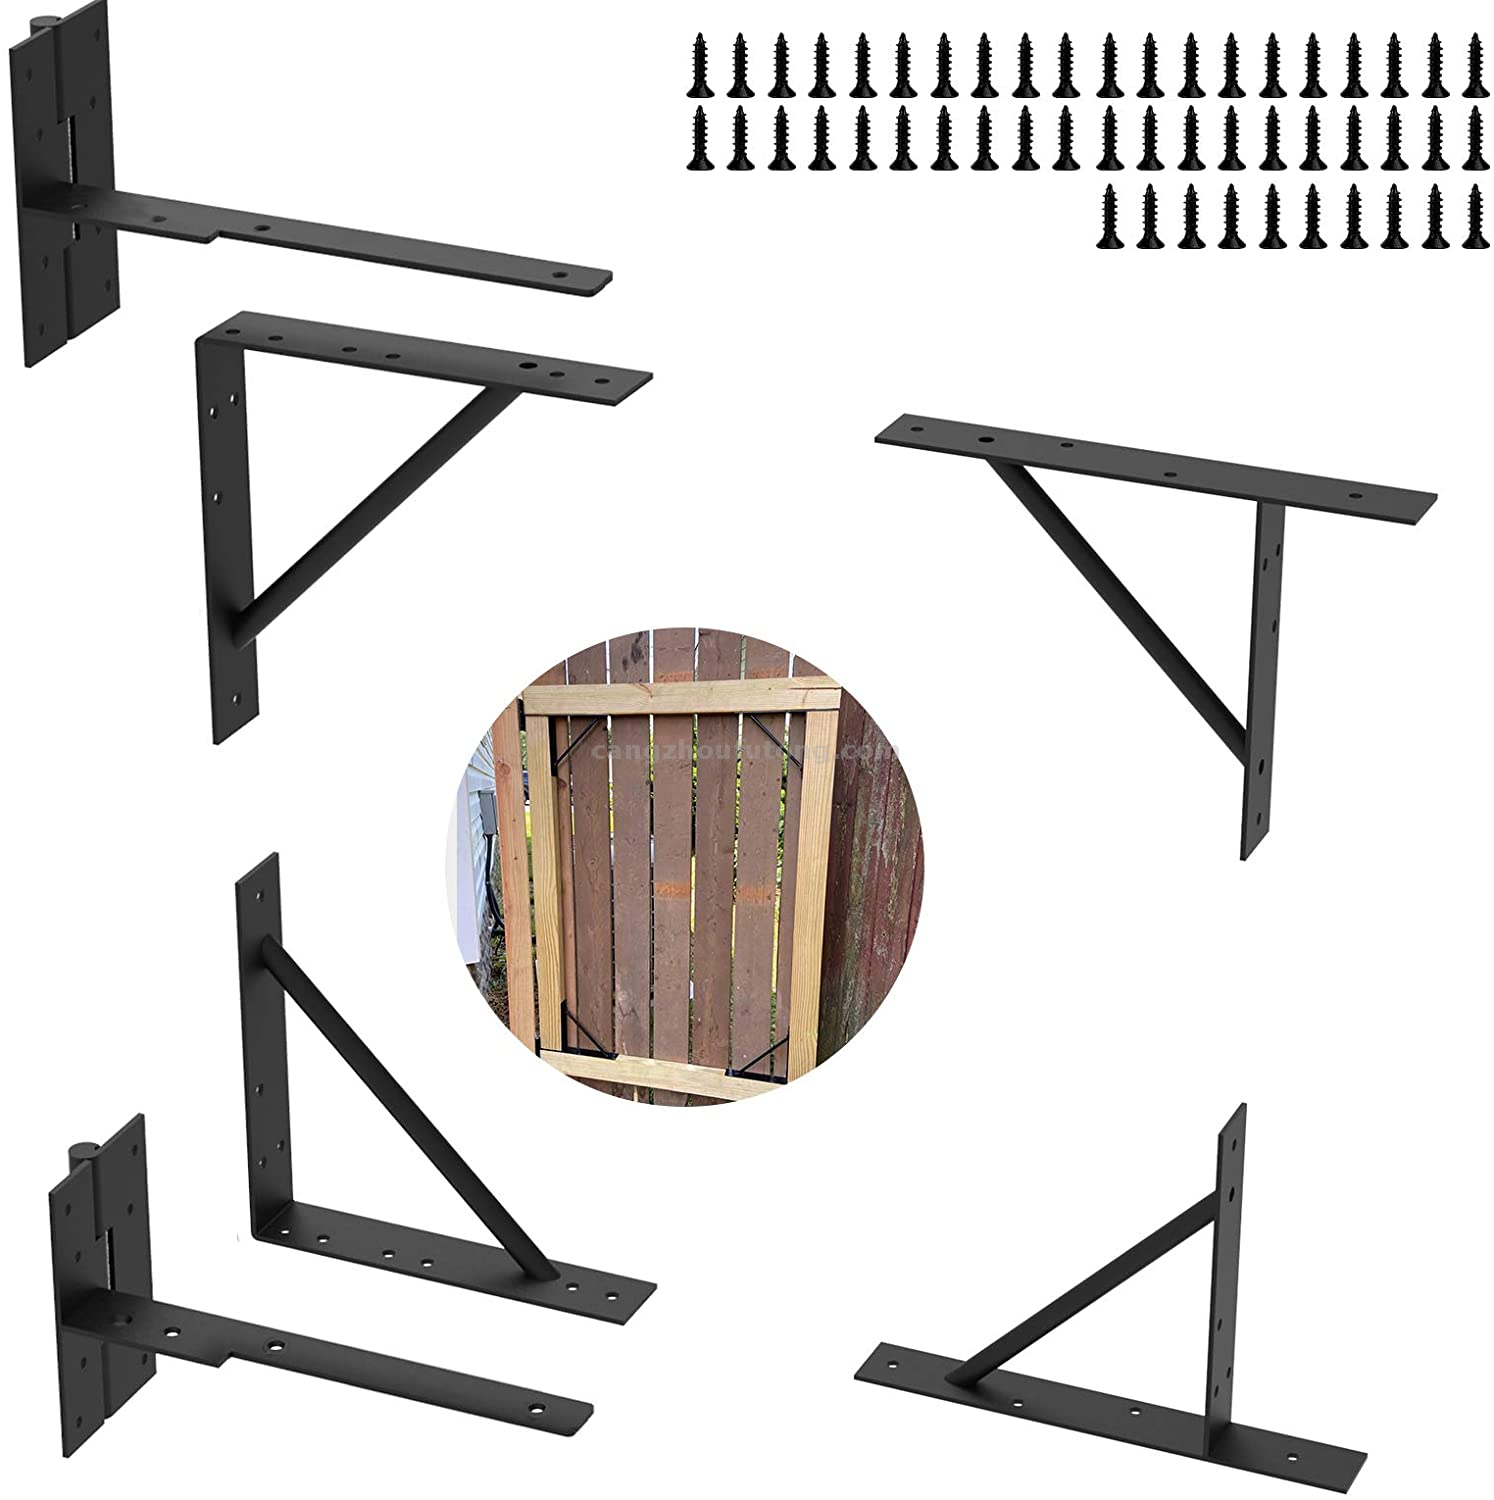 No-Sag Gate Corner Brace Bracket Kit Allows You To Build A Sag-free Square Gate